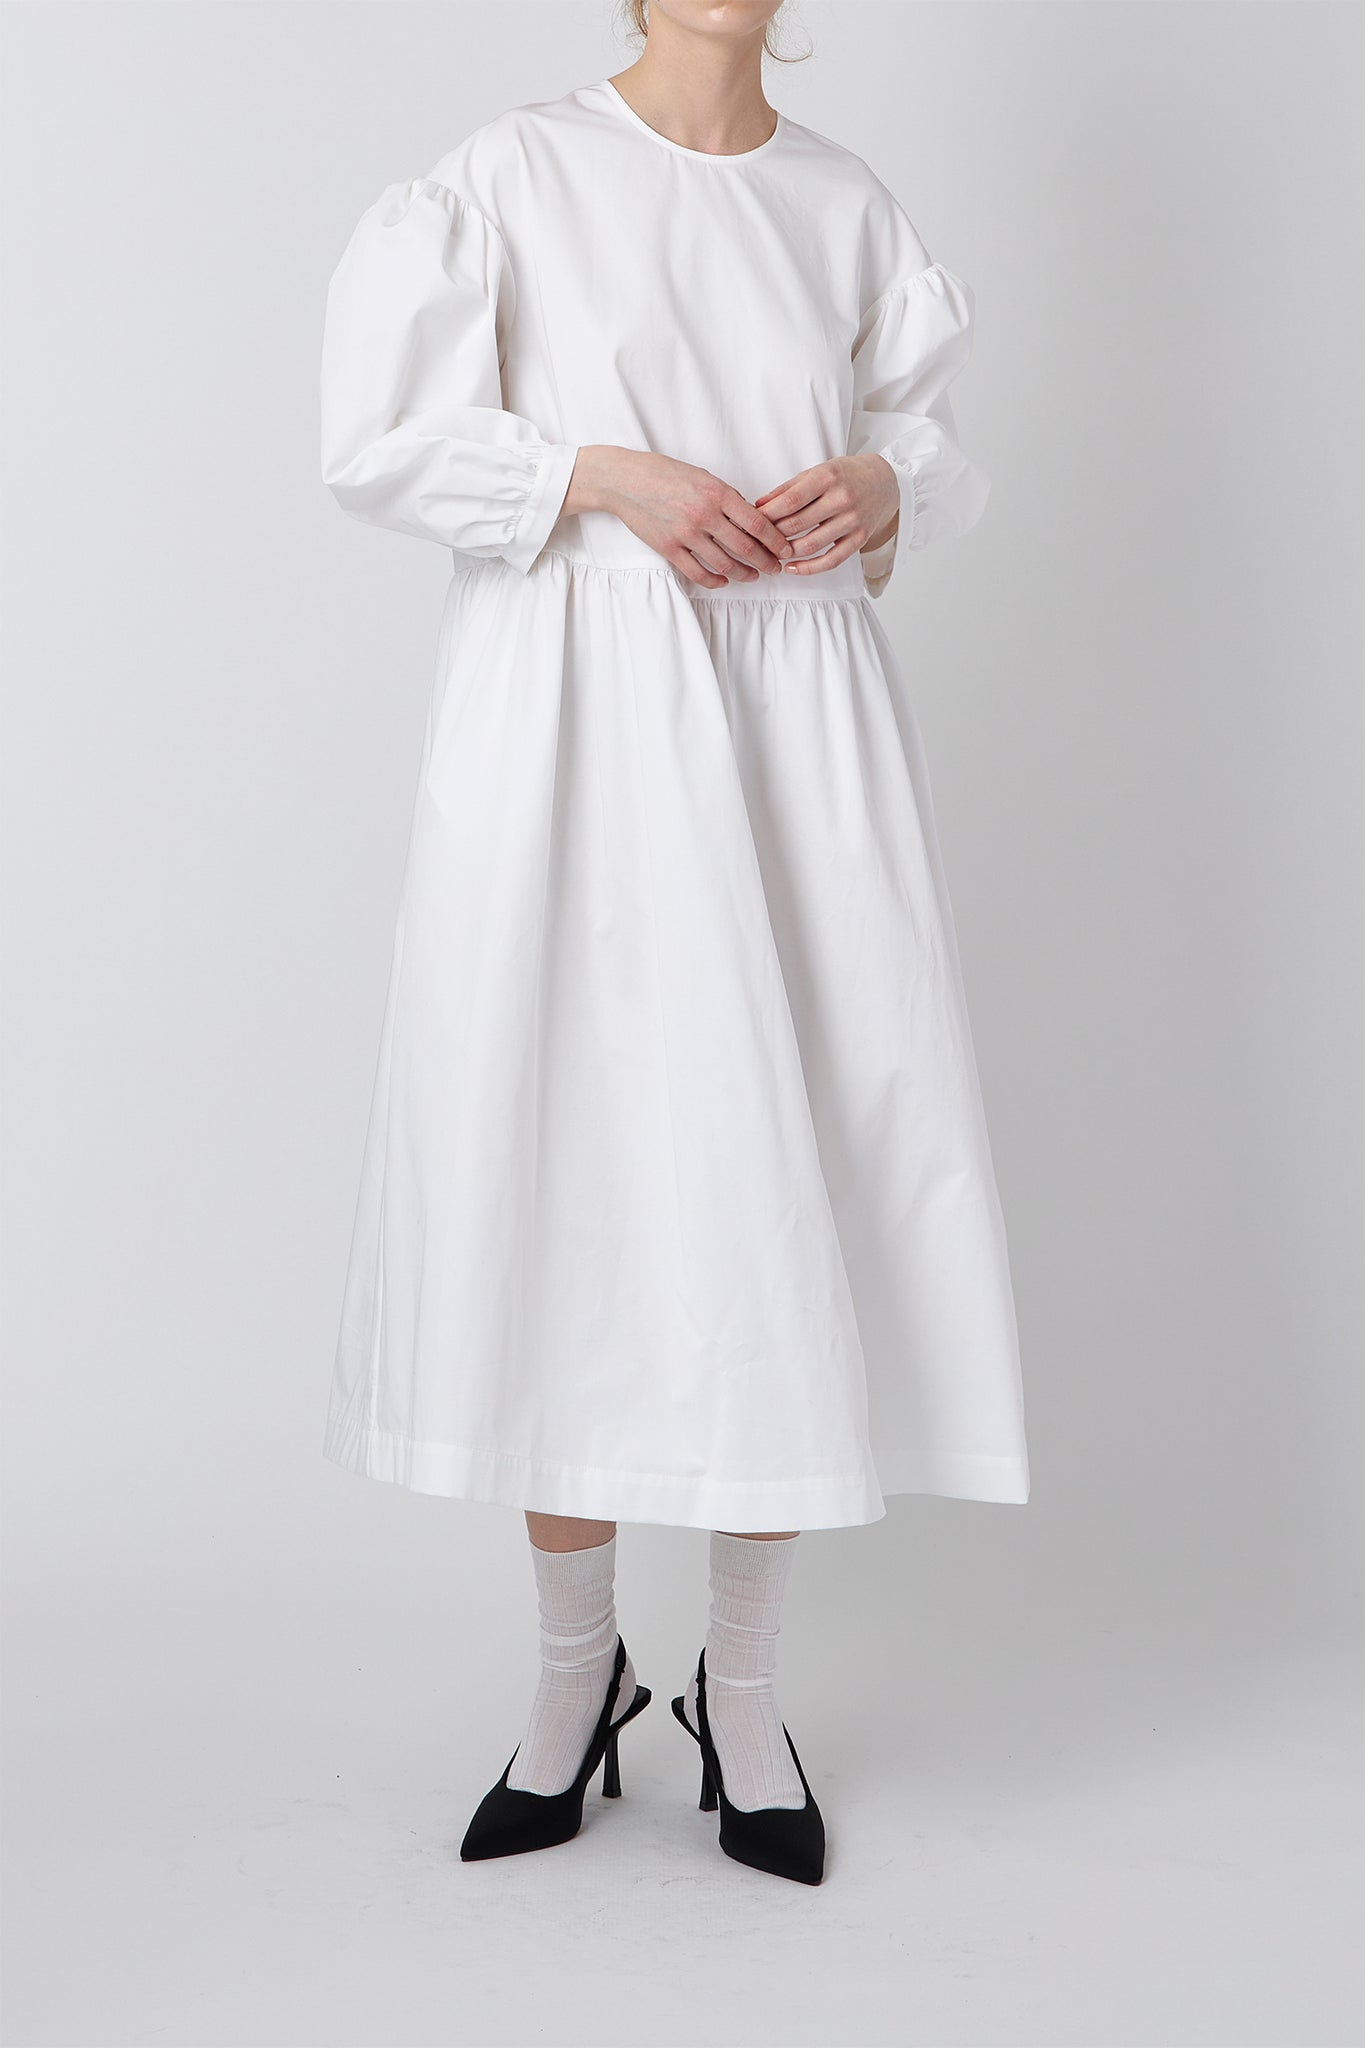 MARGOT DRESS WHITE